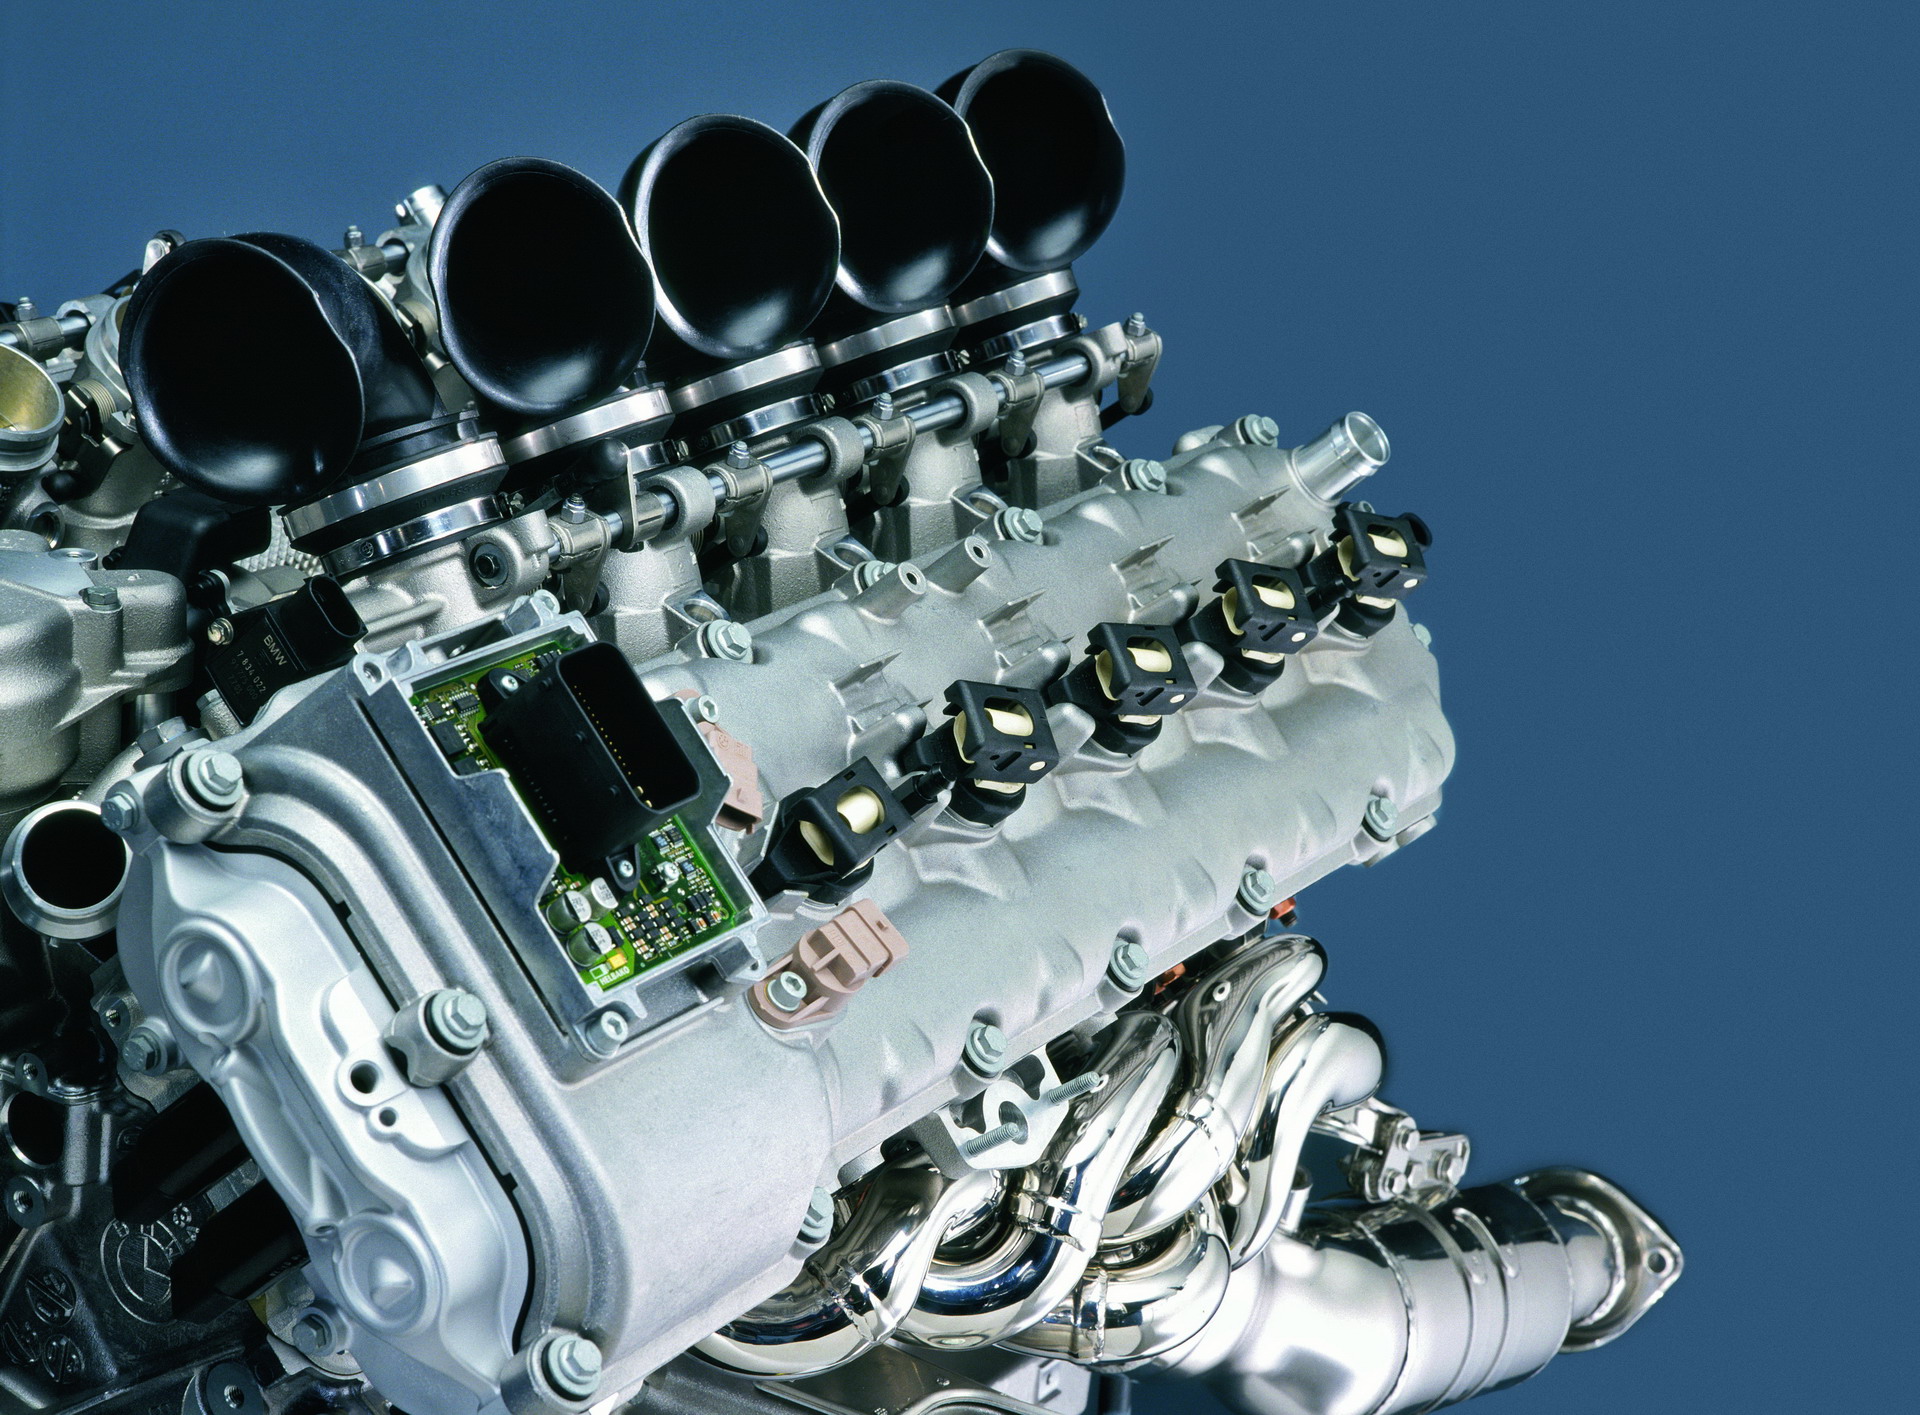 Мотор м 5. BMW s85 v10. V10 BMW m5 мотор. BMW s85 v10 5.8. V10 engine BMW.